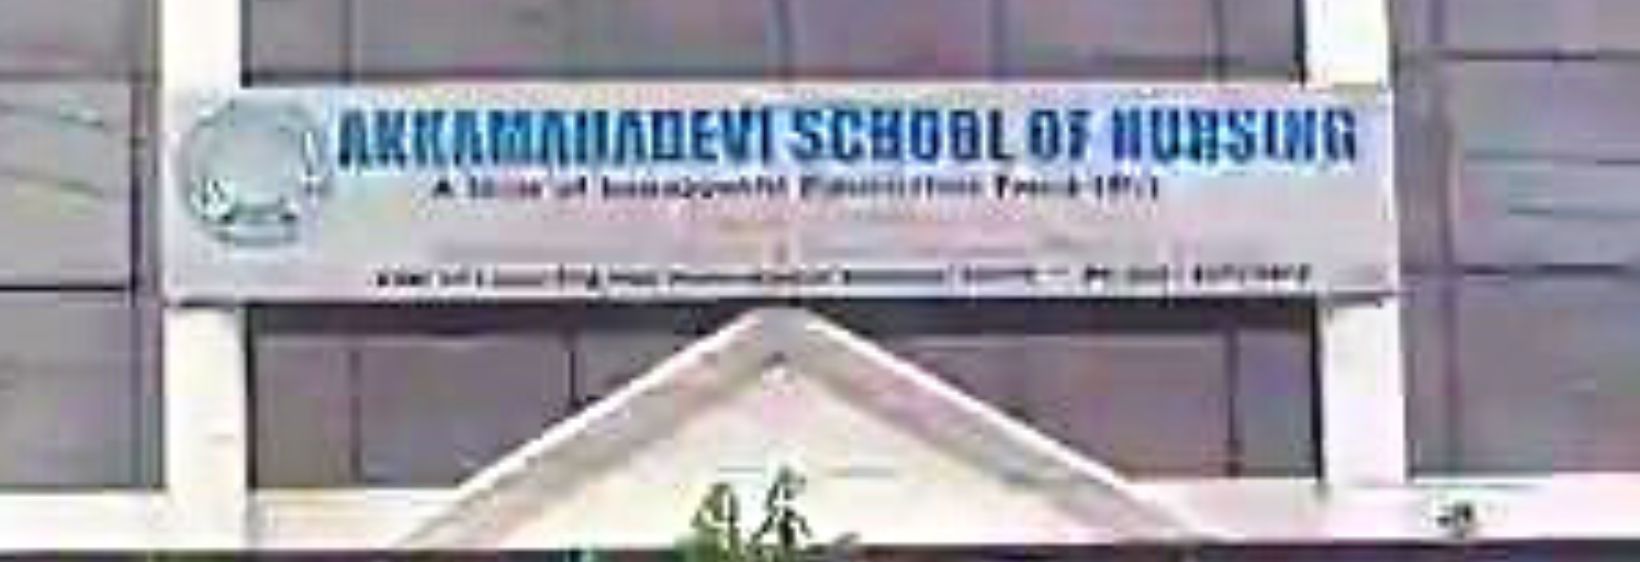 Akkamahadevi college of Nursing - shantiniketan, Bidar